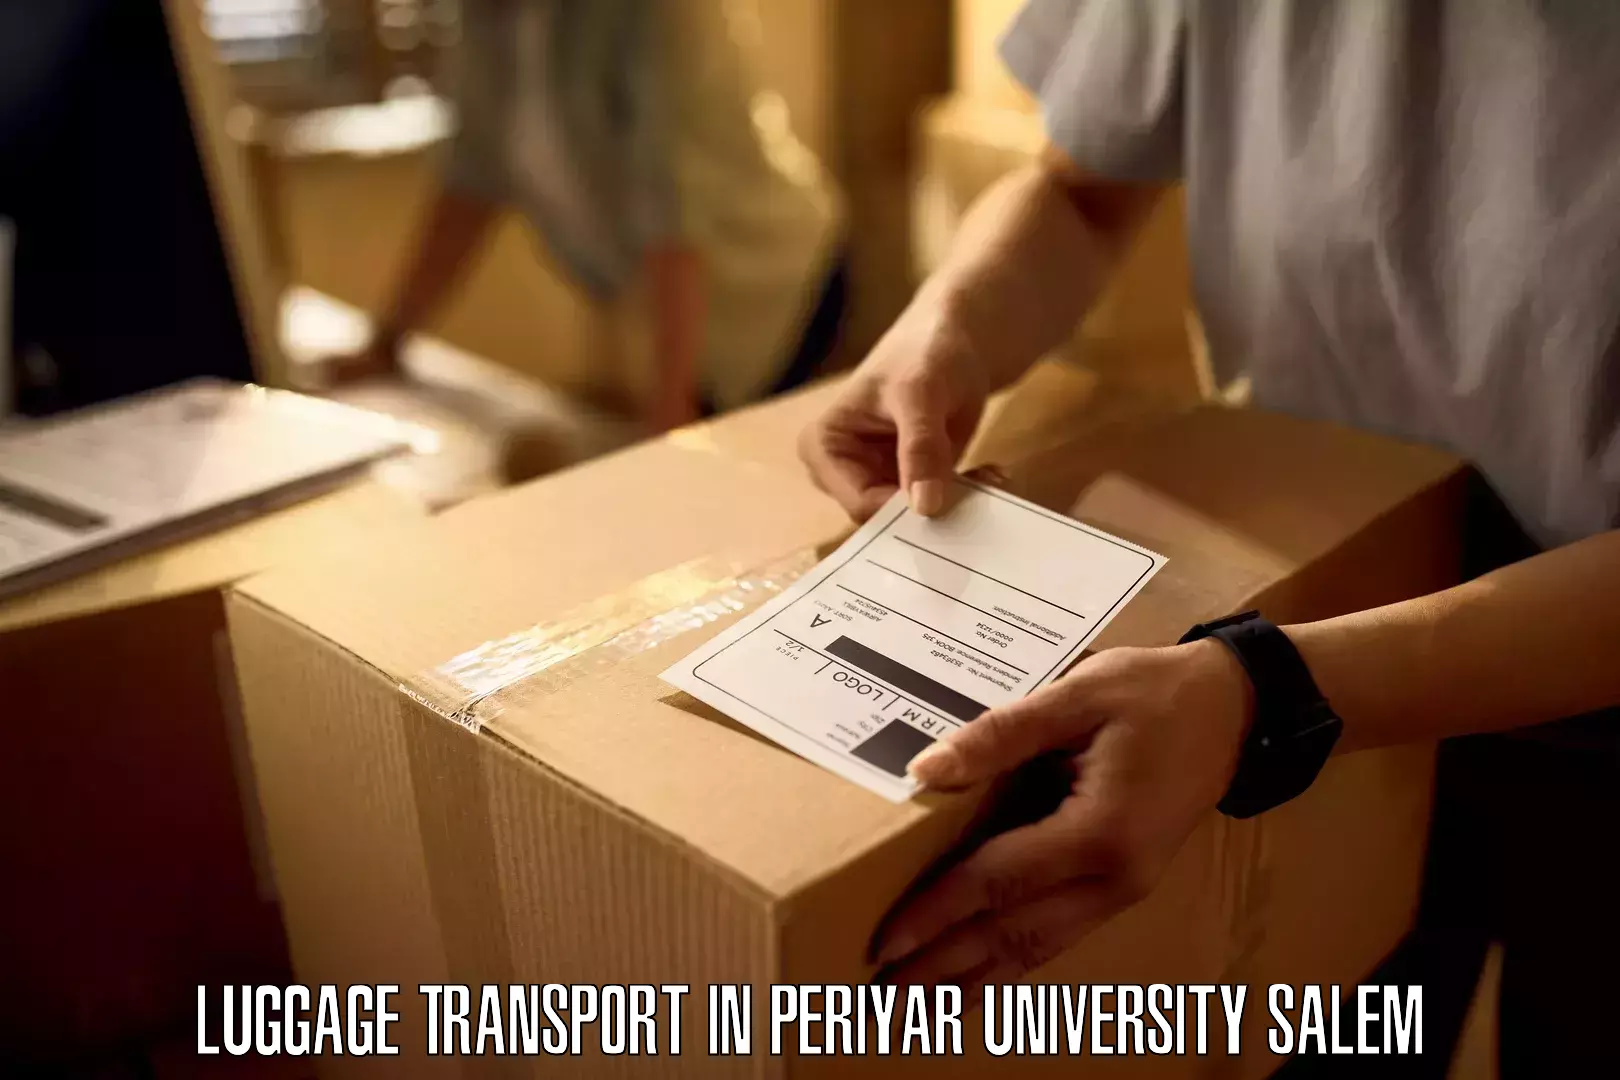 Luggage shipment processing in Periyar University Salem